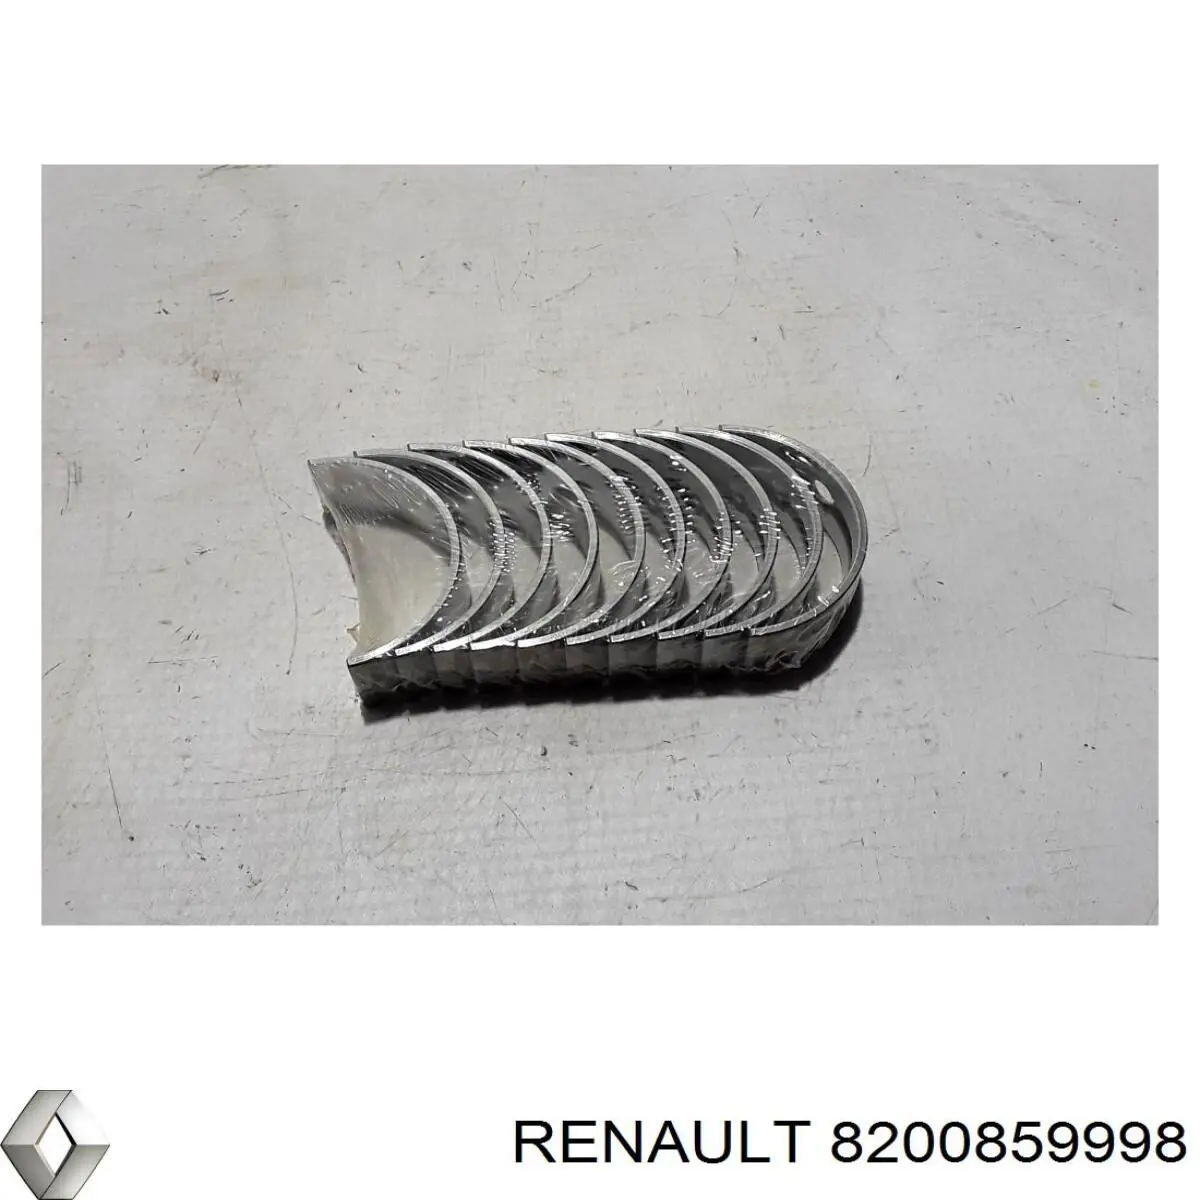 8200859998 Renault (RVI) вкладыши коленвала коренные, комплект, стандарт (std)